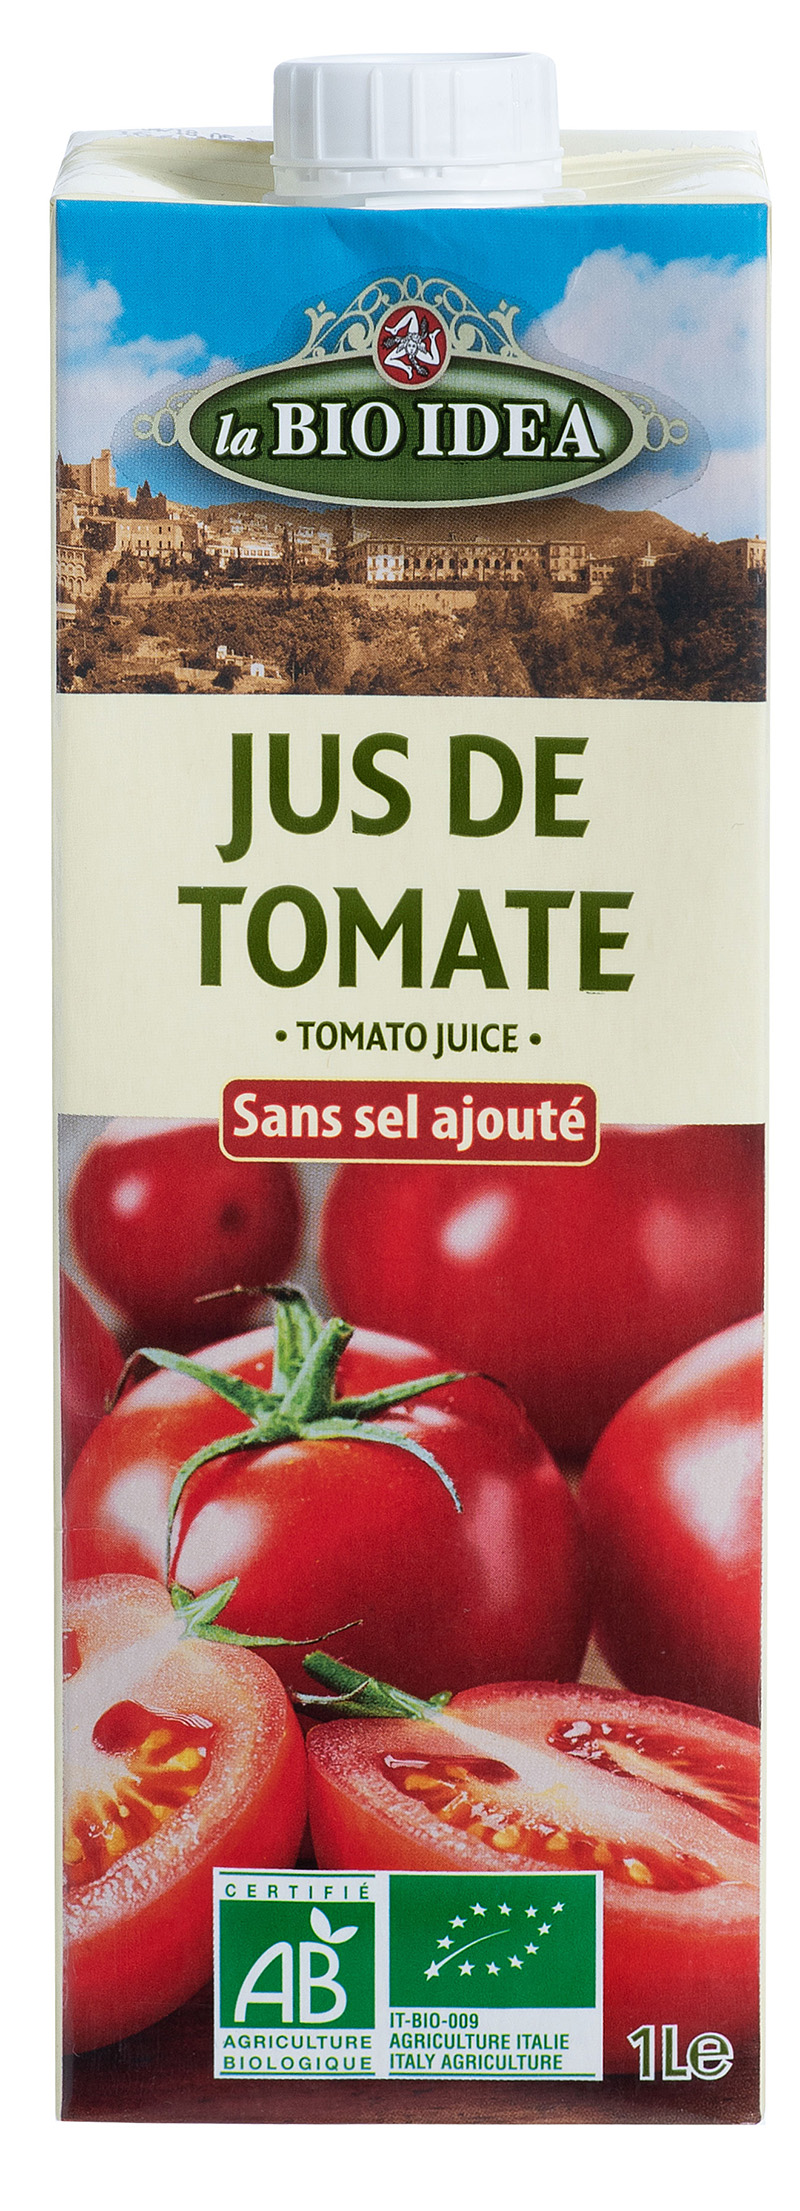 Zoom sur le jus de tomate « La bio idea »